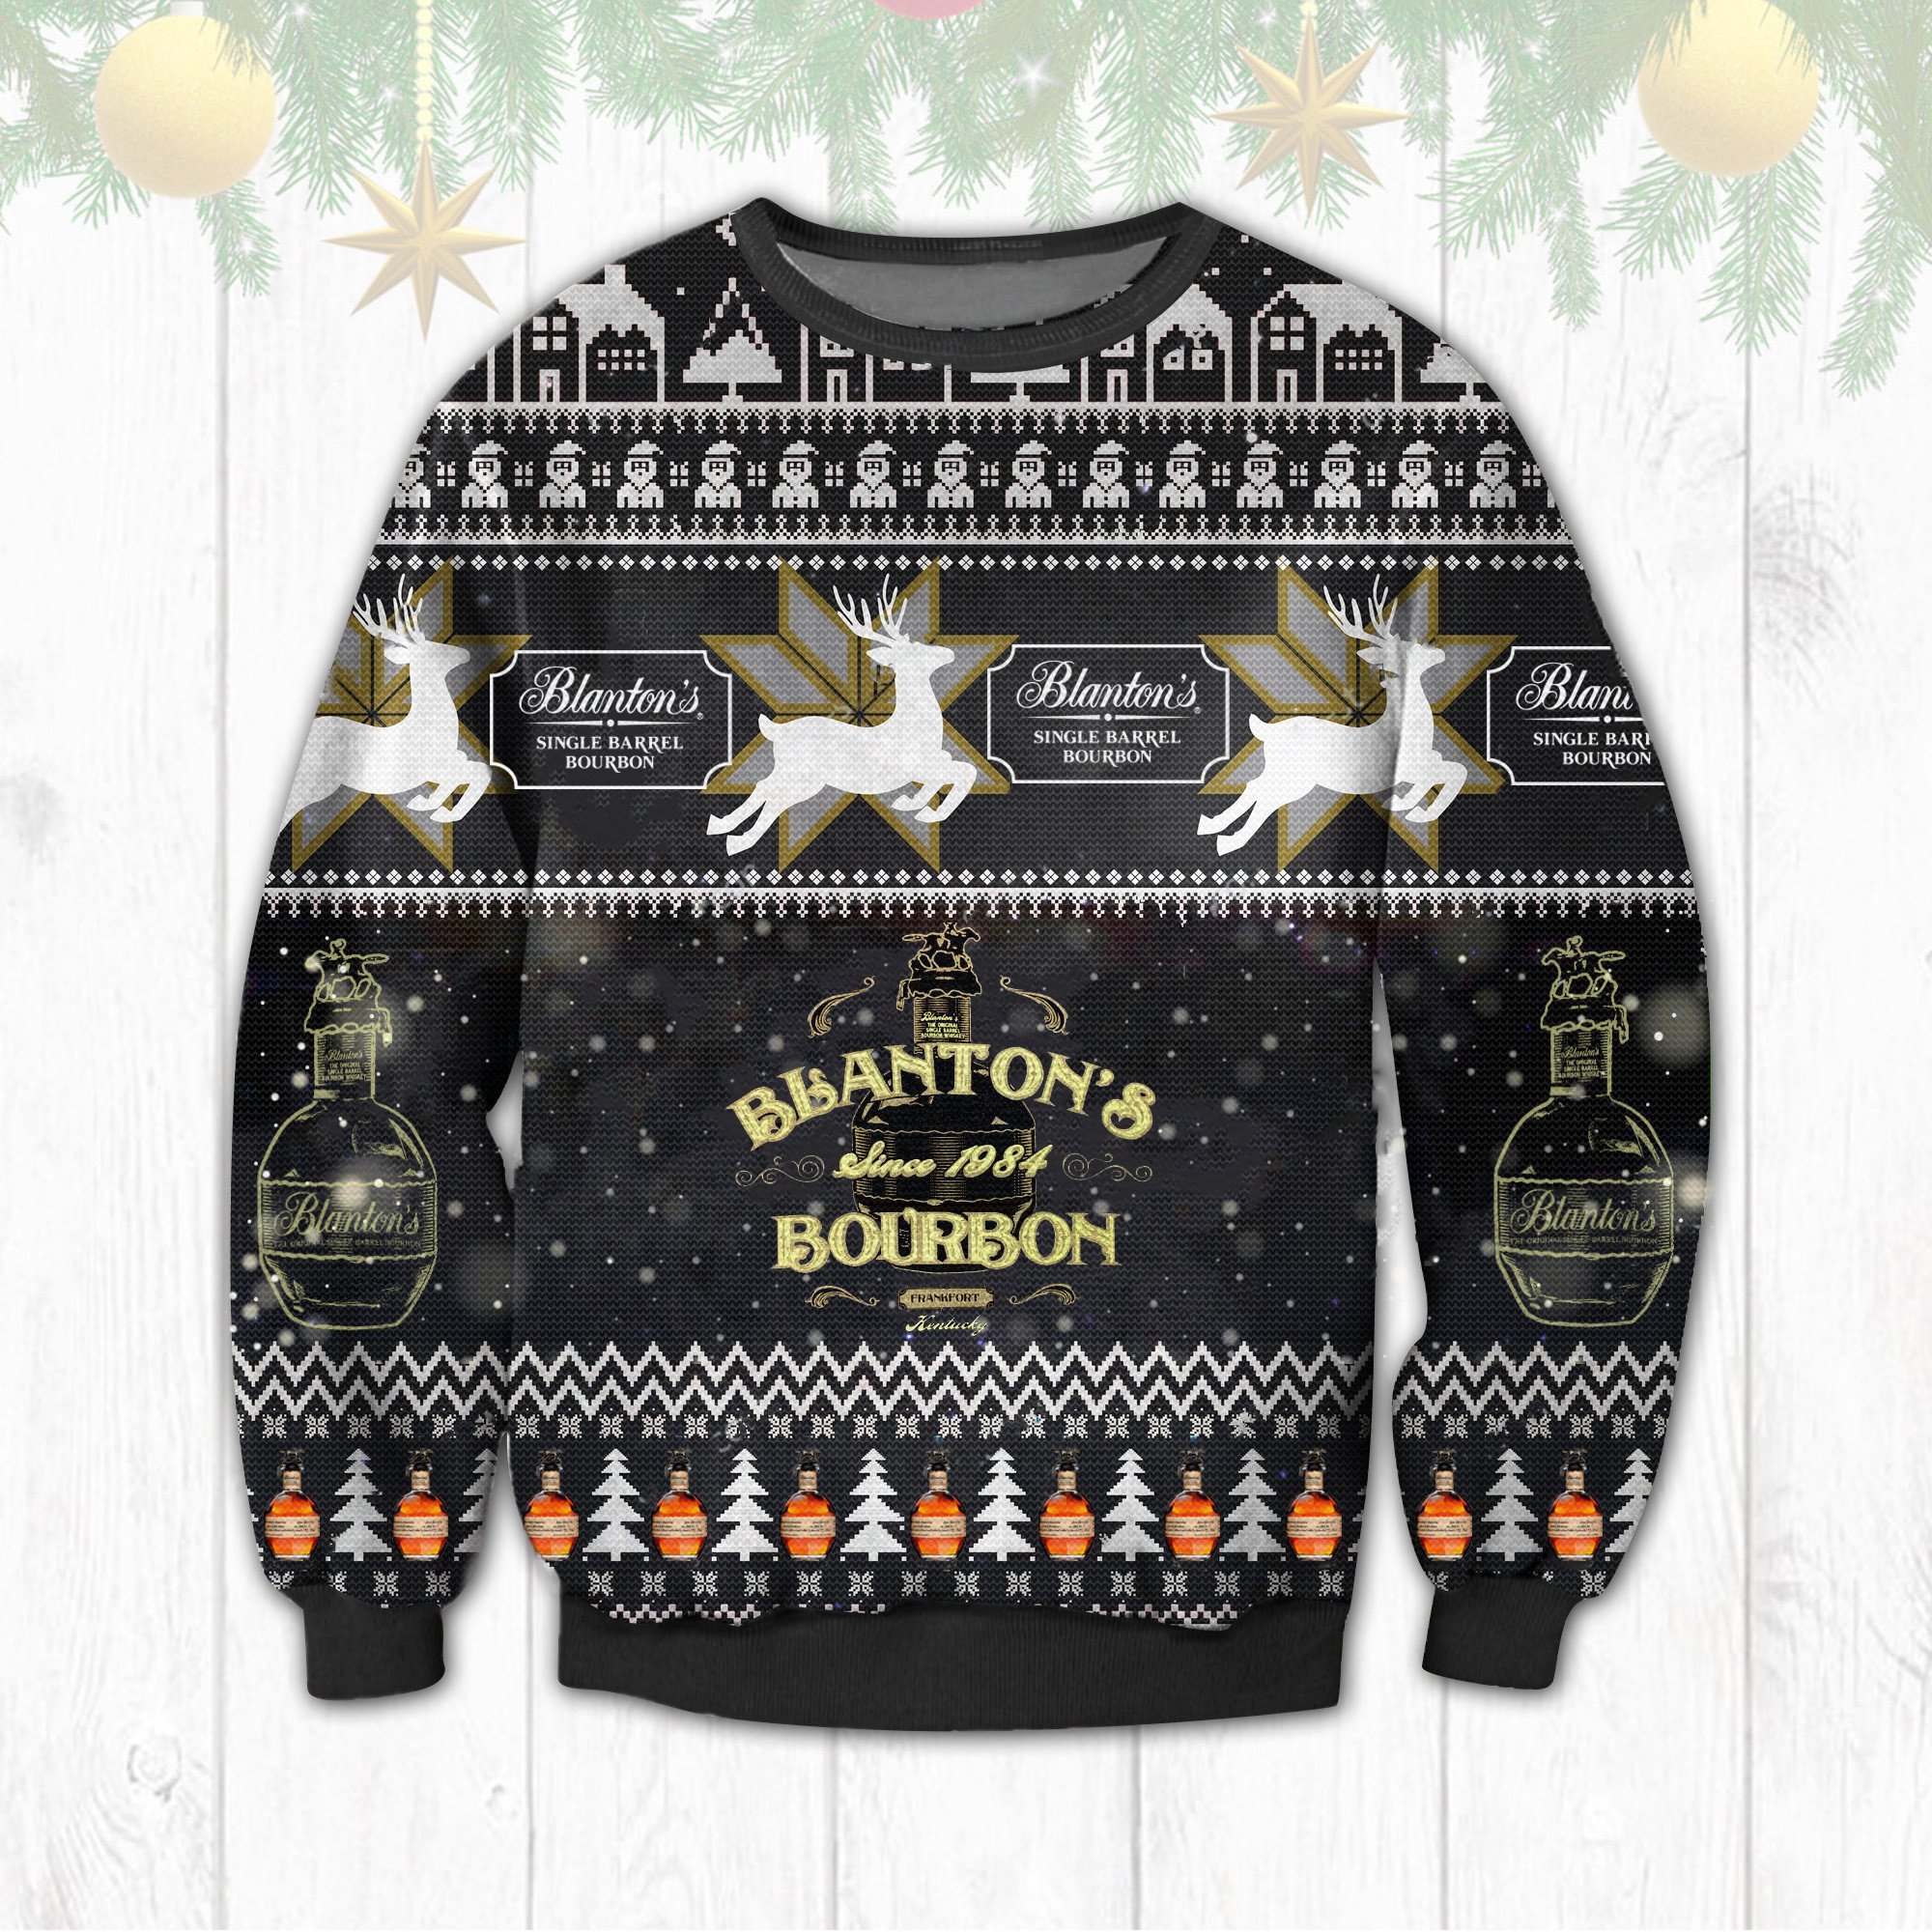 HOT Blanton's Bourbon Since 1984 ugly Christmas sweater 1